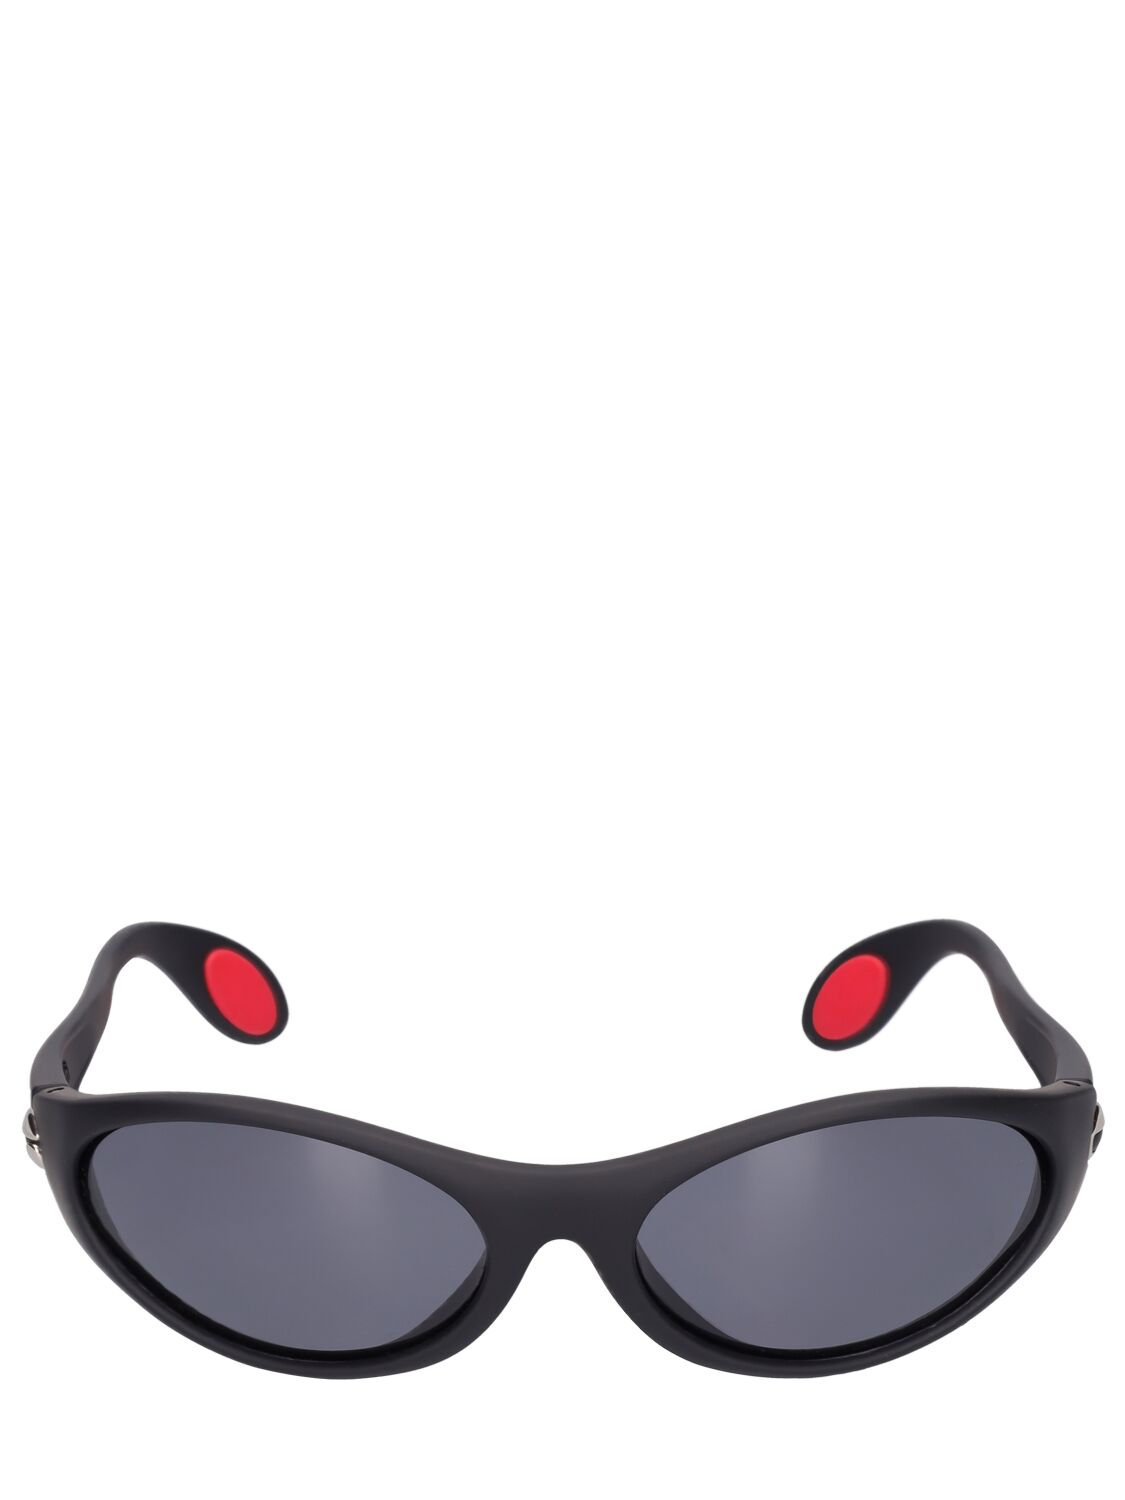 Logo Cycling Sunglasses